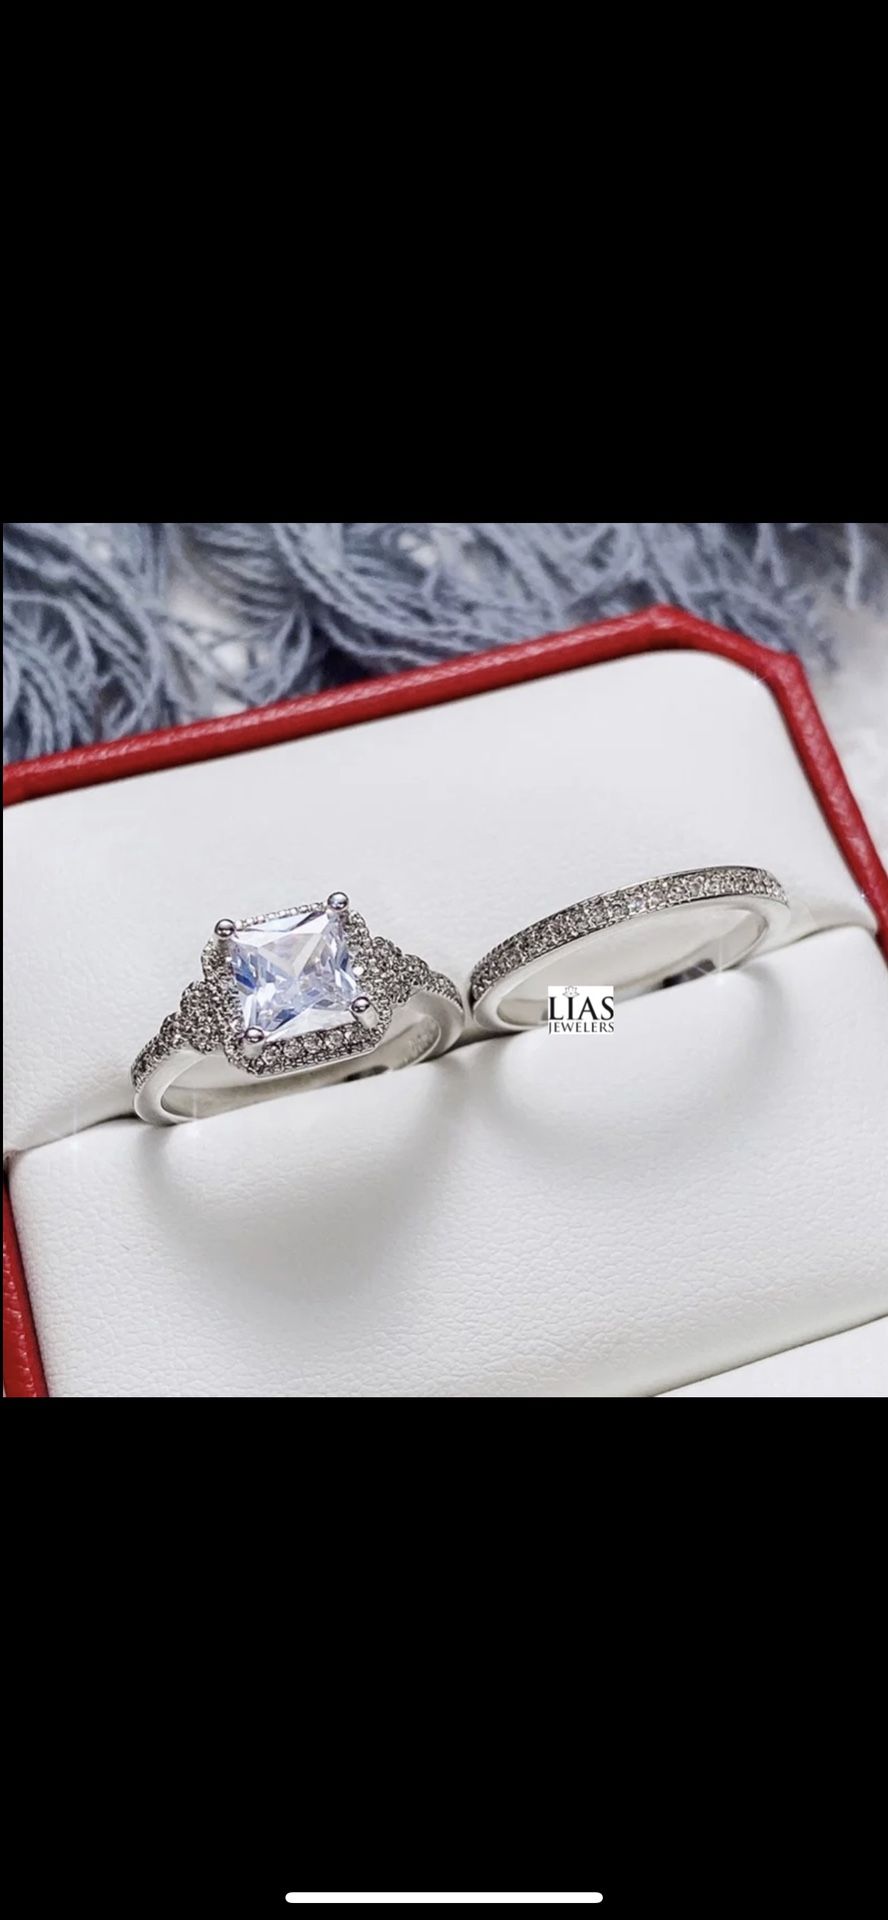 New 18k White Gold Wedding Ring Set